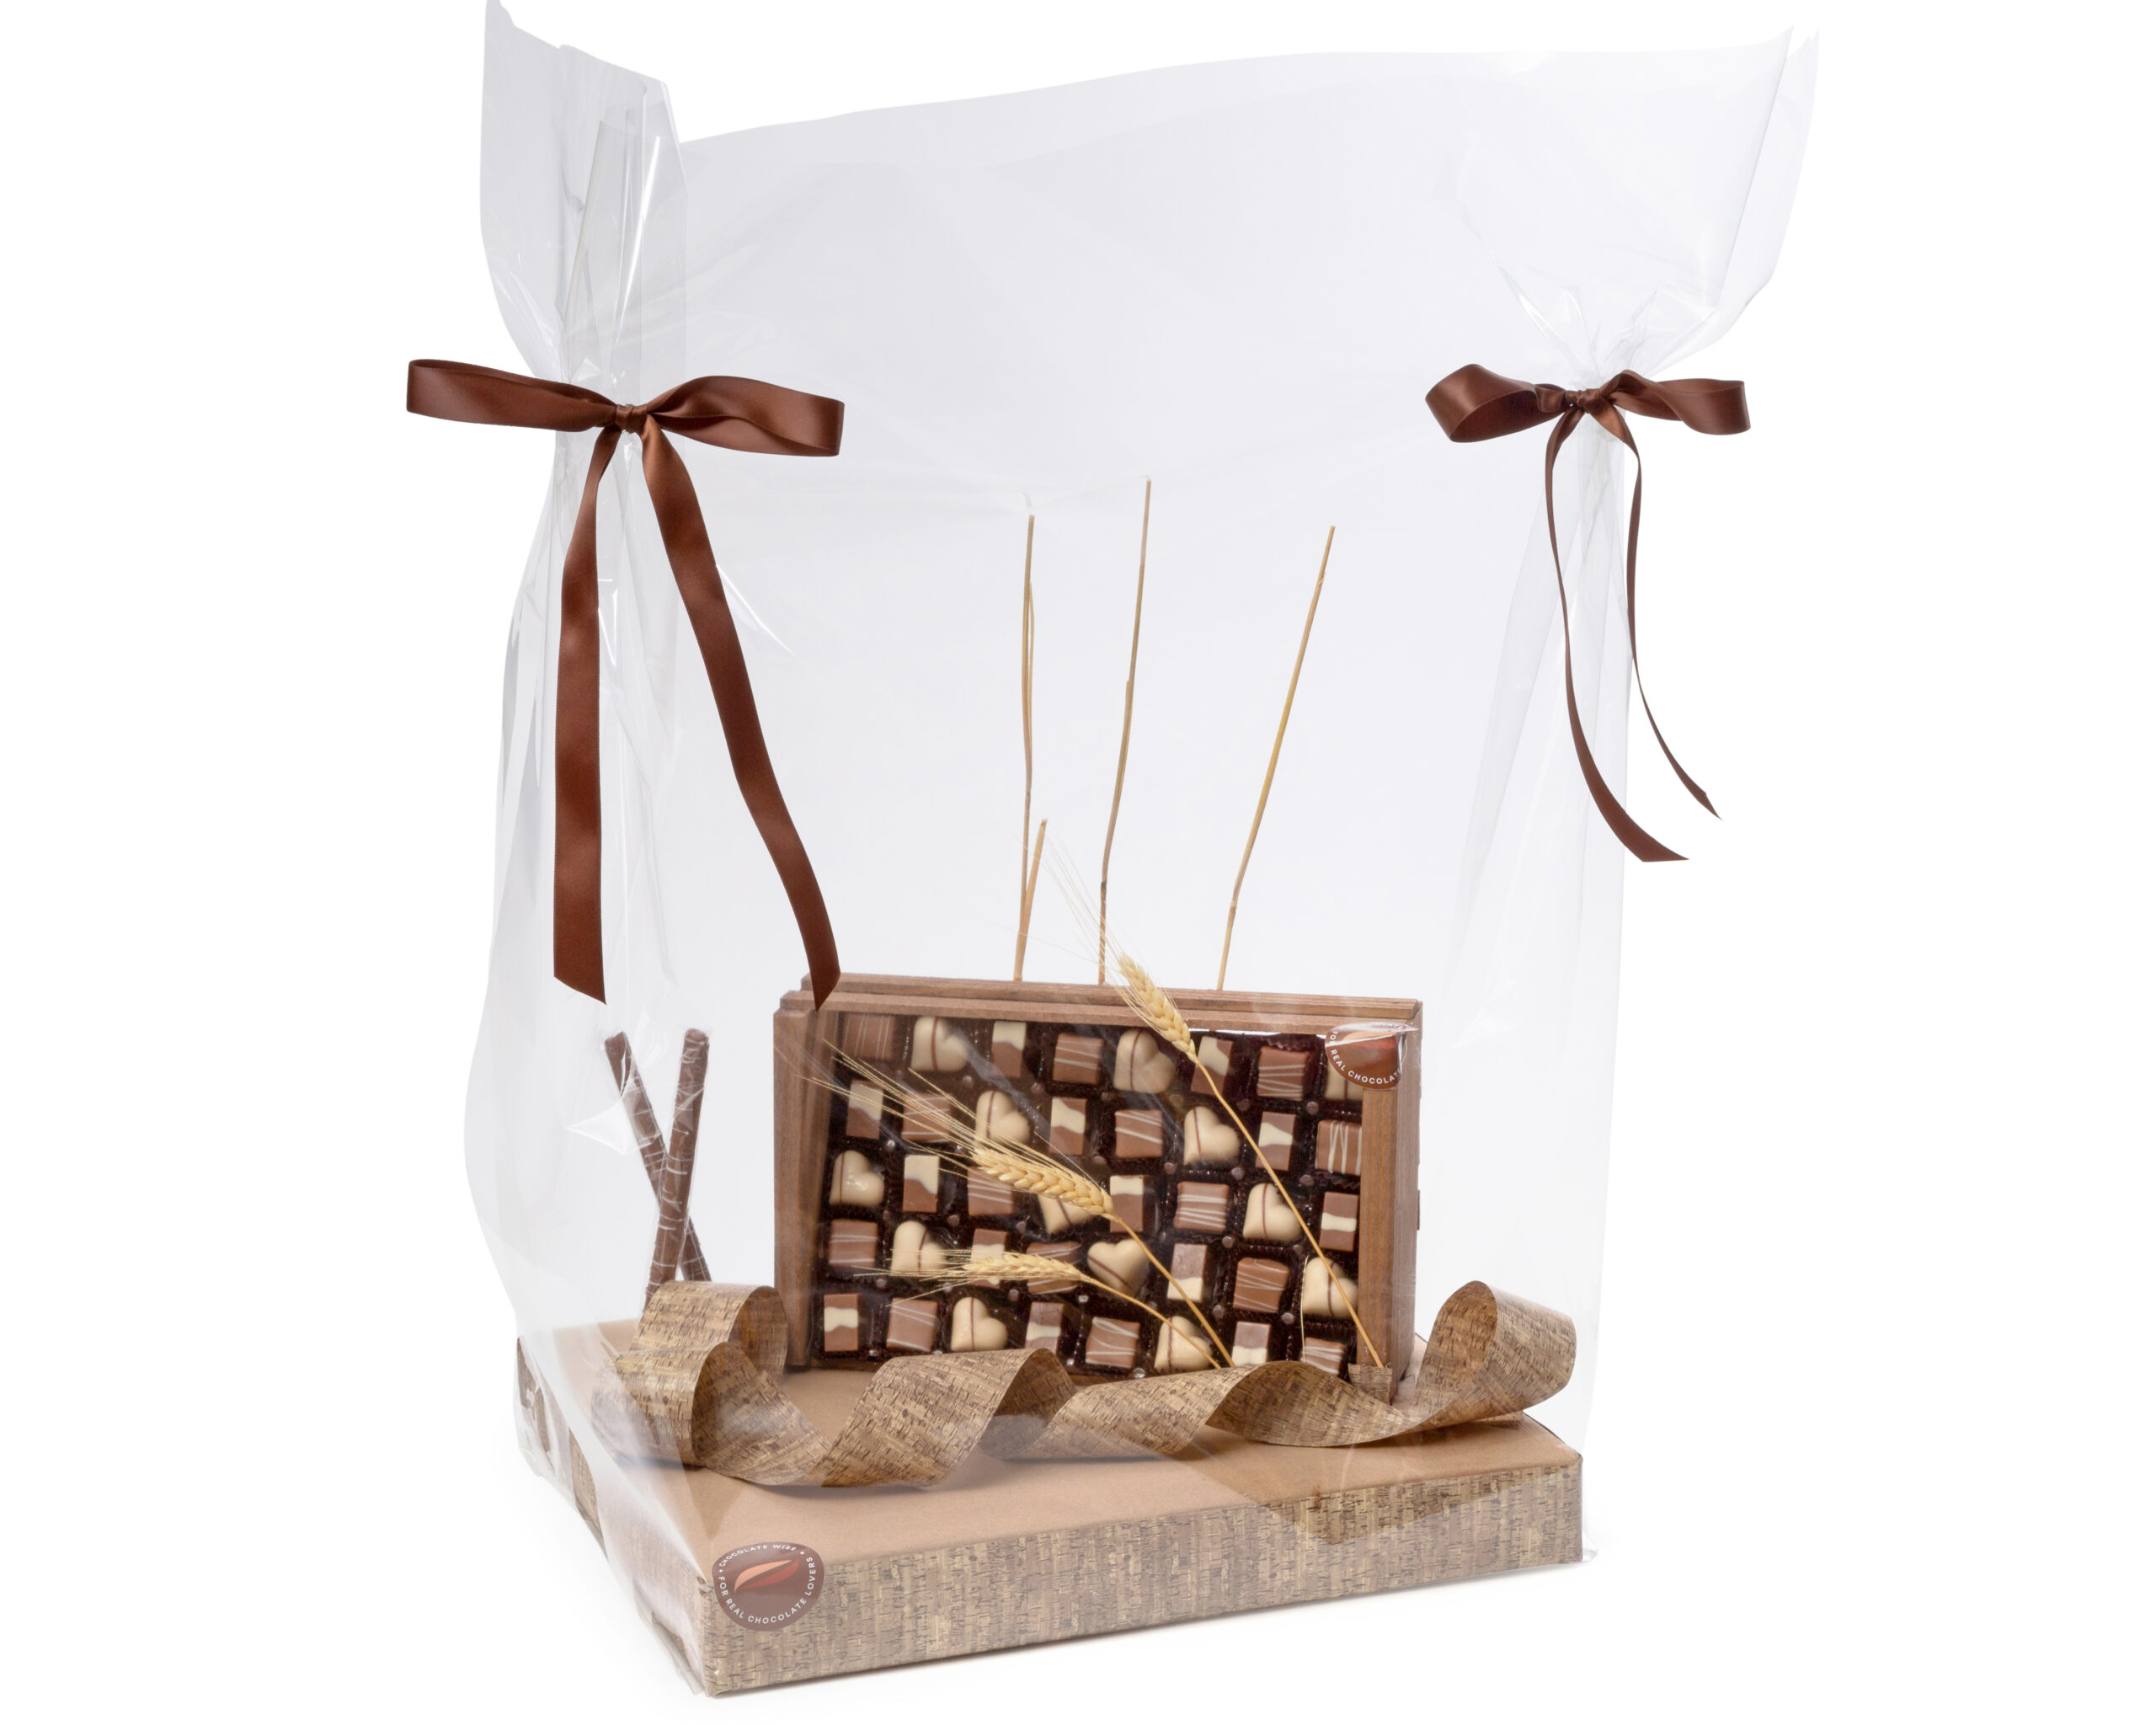 Heart Chocolate Gift Box – Chocolate Wise